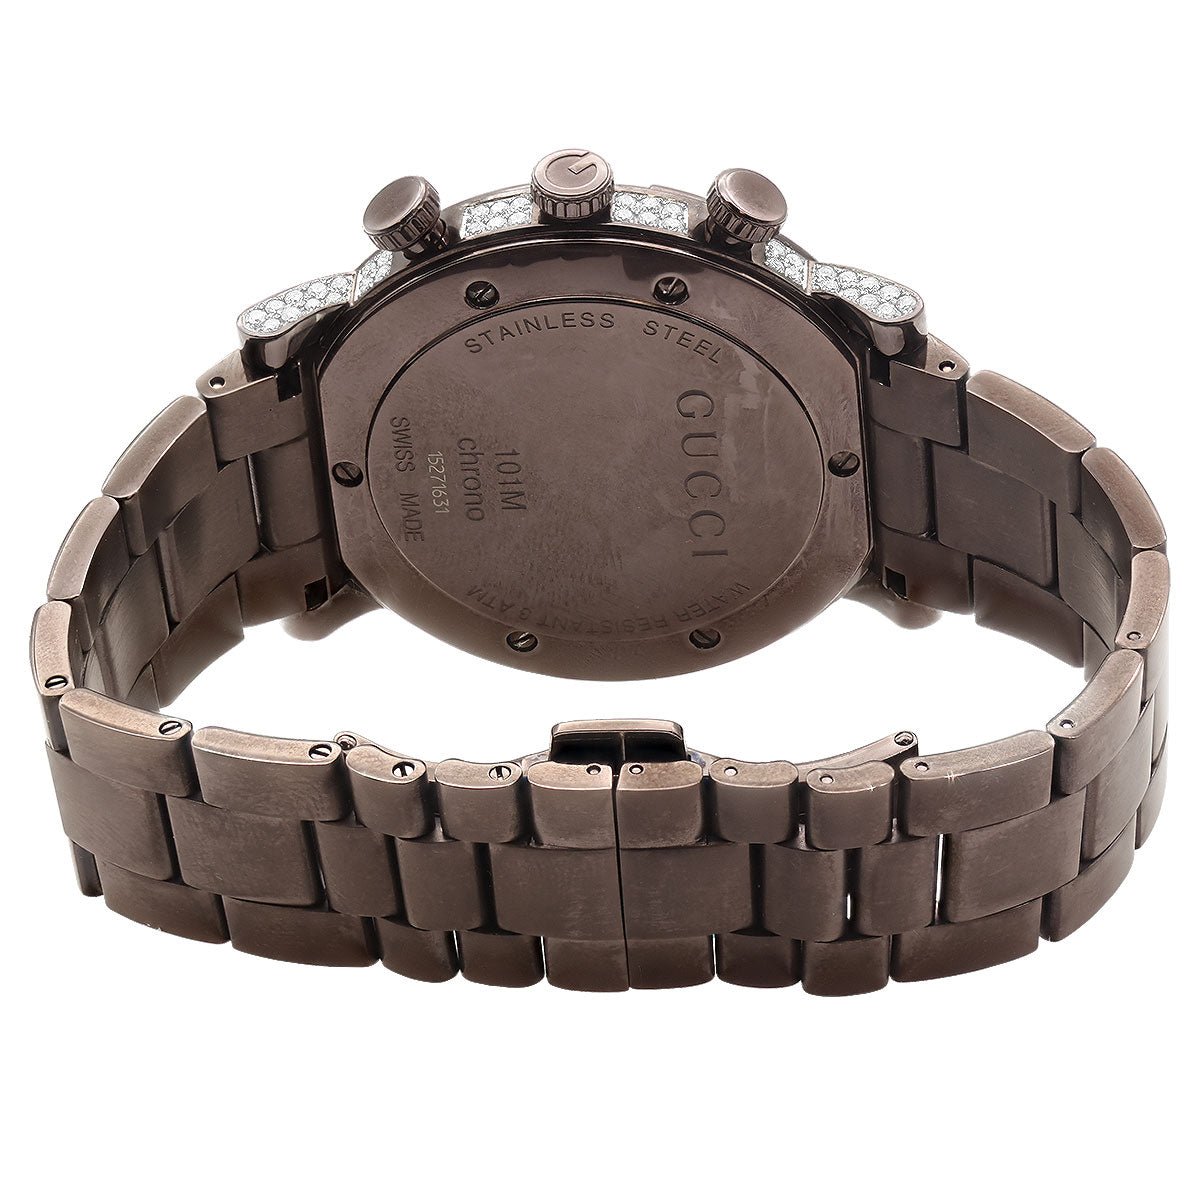 Gucci G Chrono Brown Dial Brown Steel Strap Watch For Men - YA101341